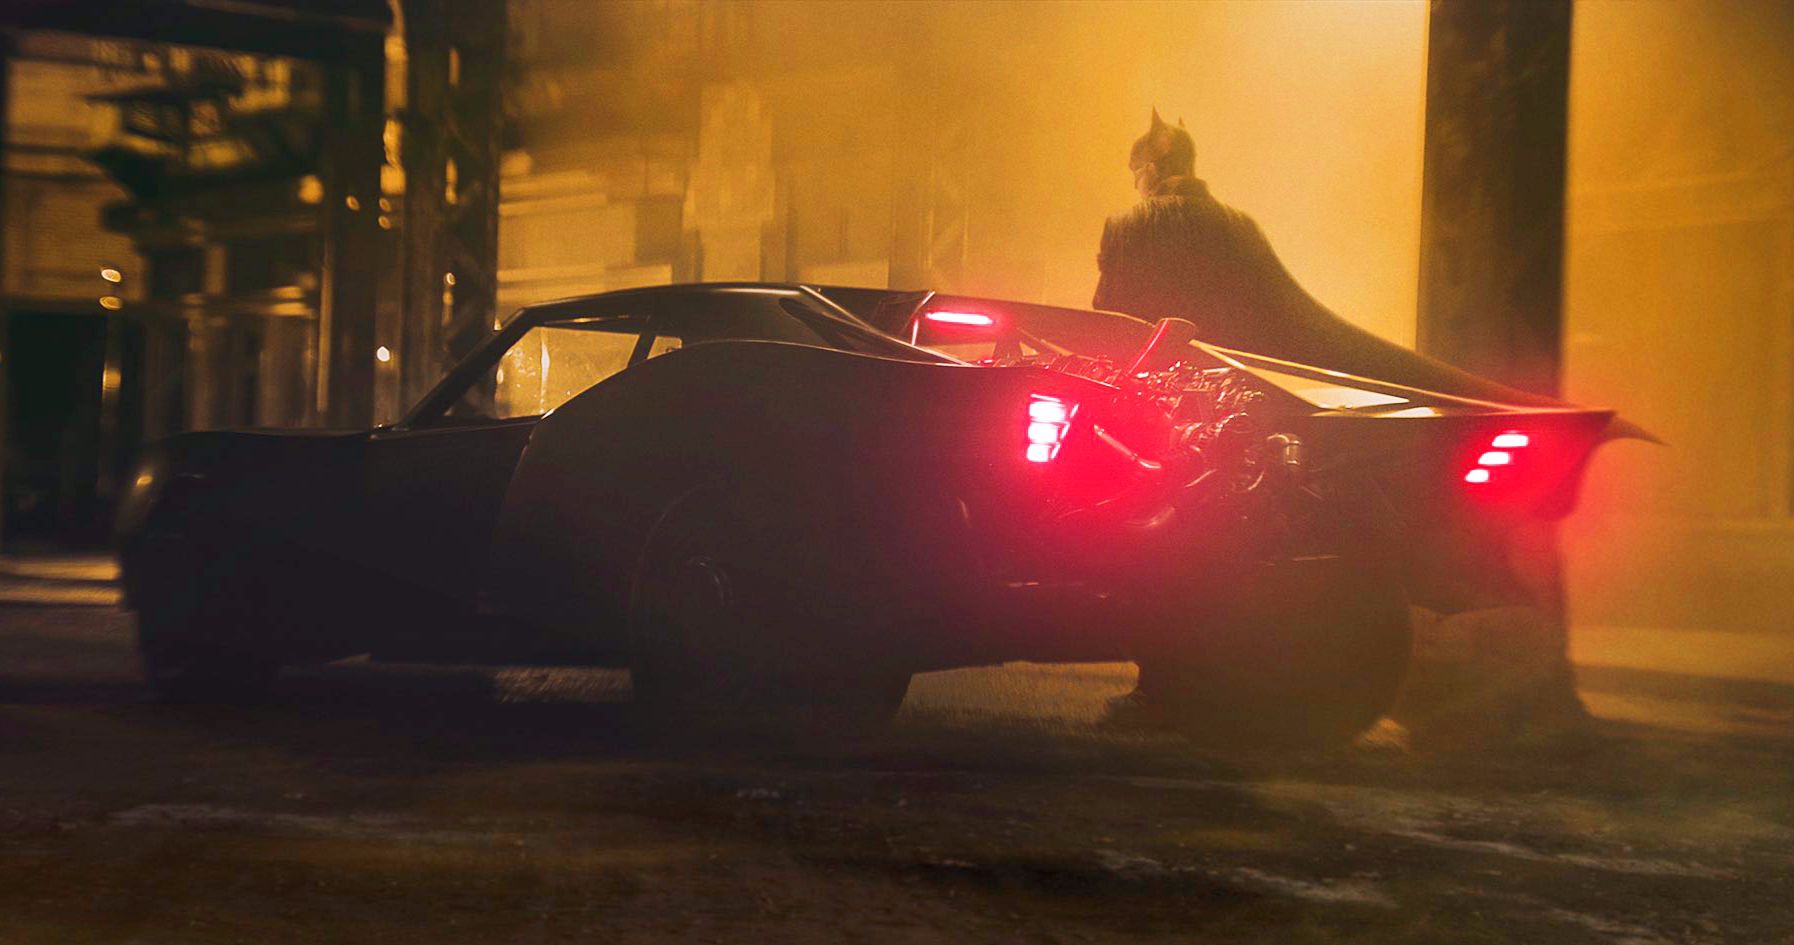 The Batman Batmobile Officially Revealed